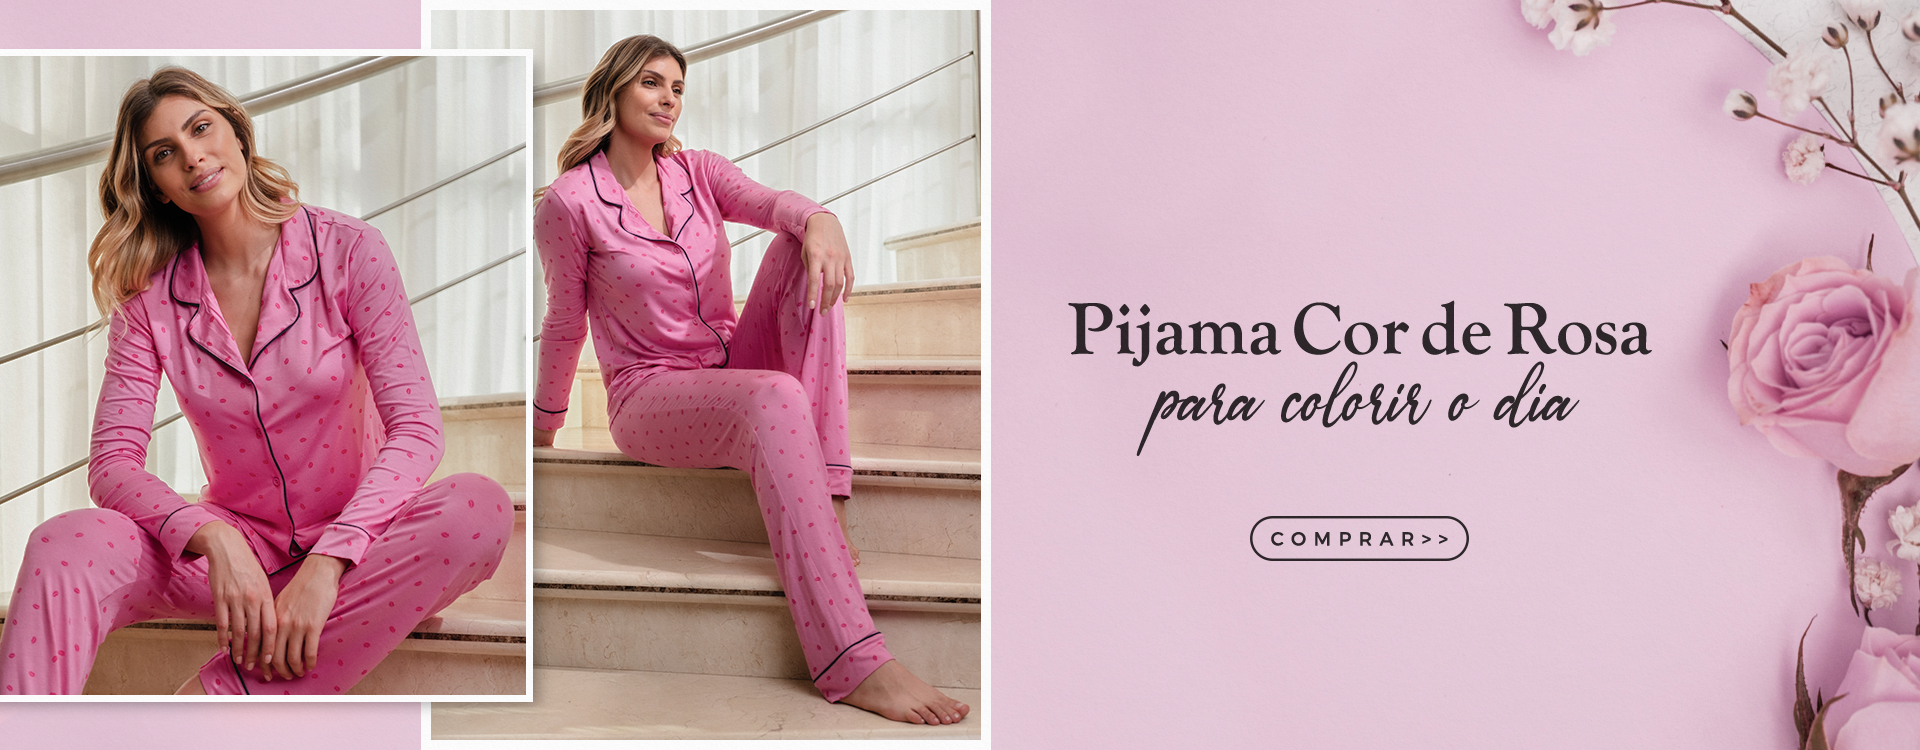 Pijama Cor de Rosa